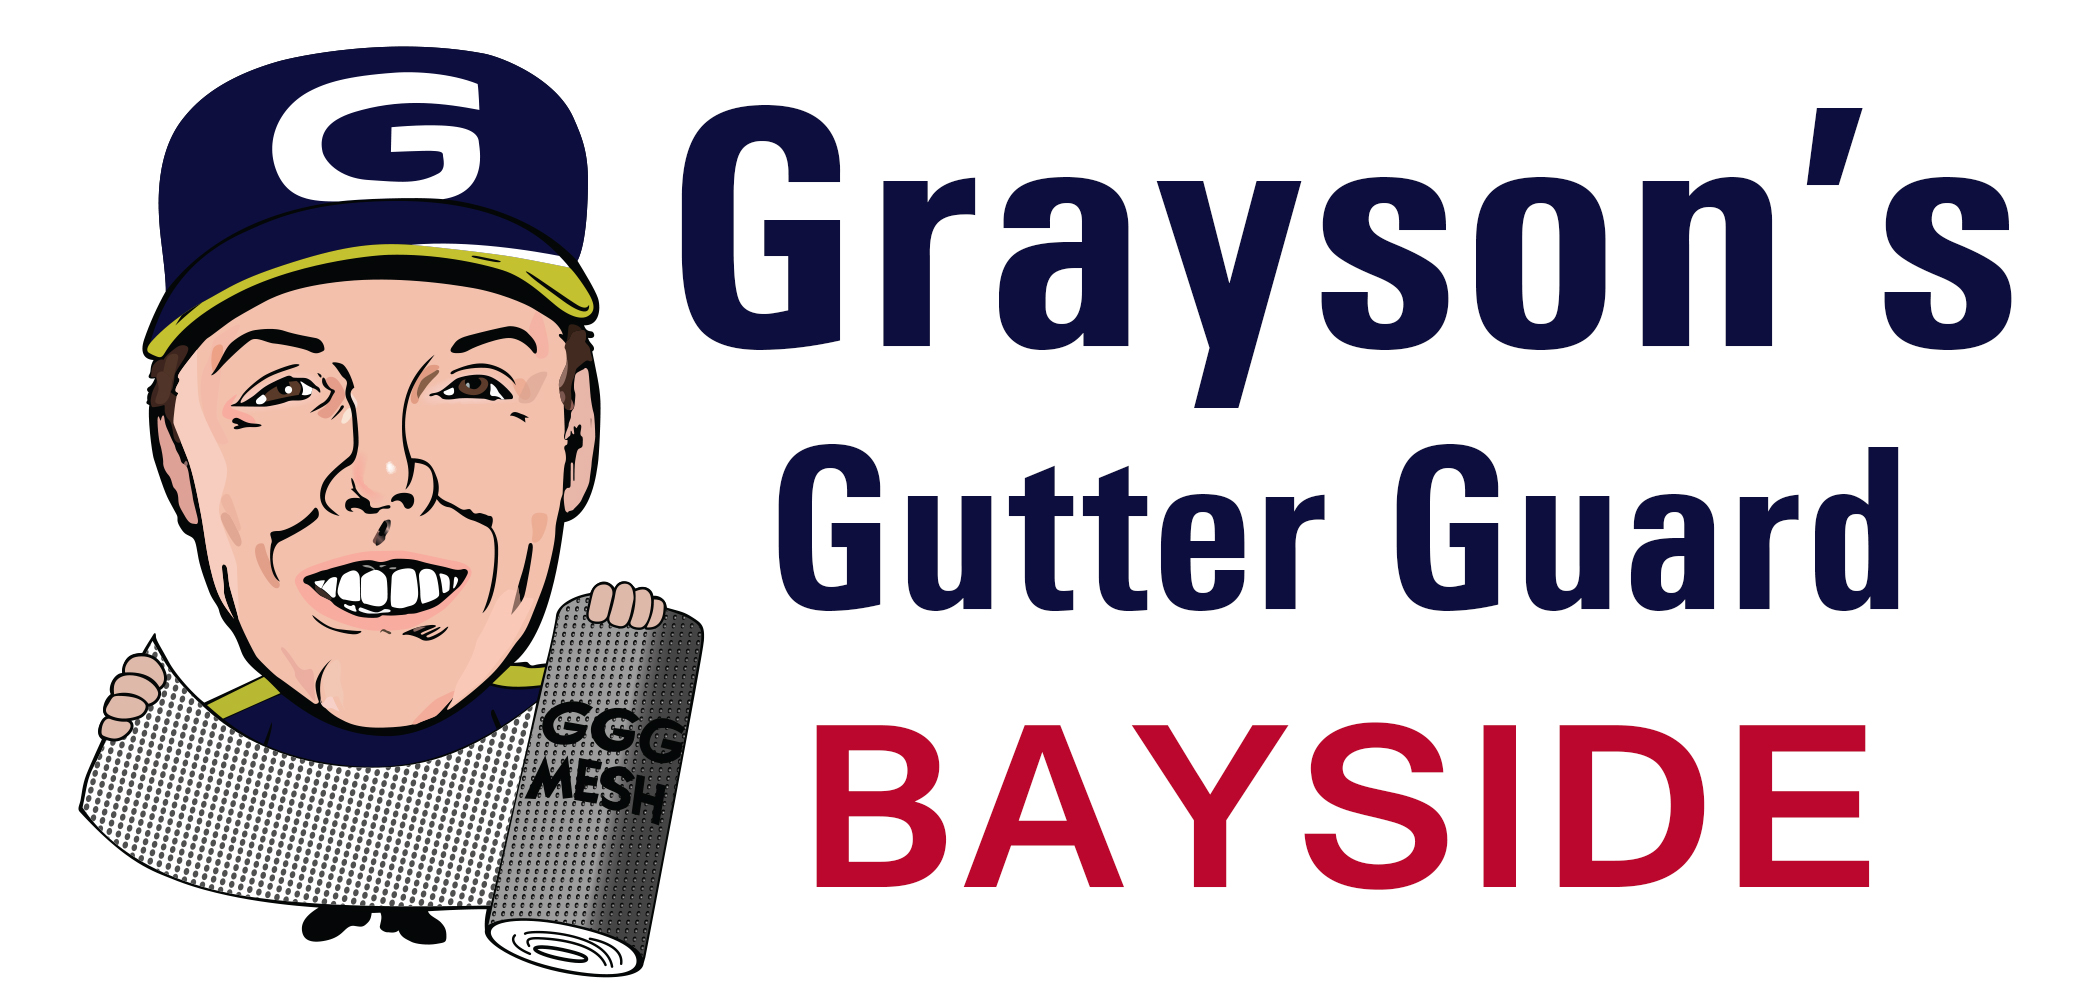 Grayson’s Gutter Guard Bayside